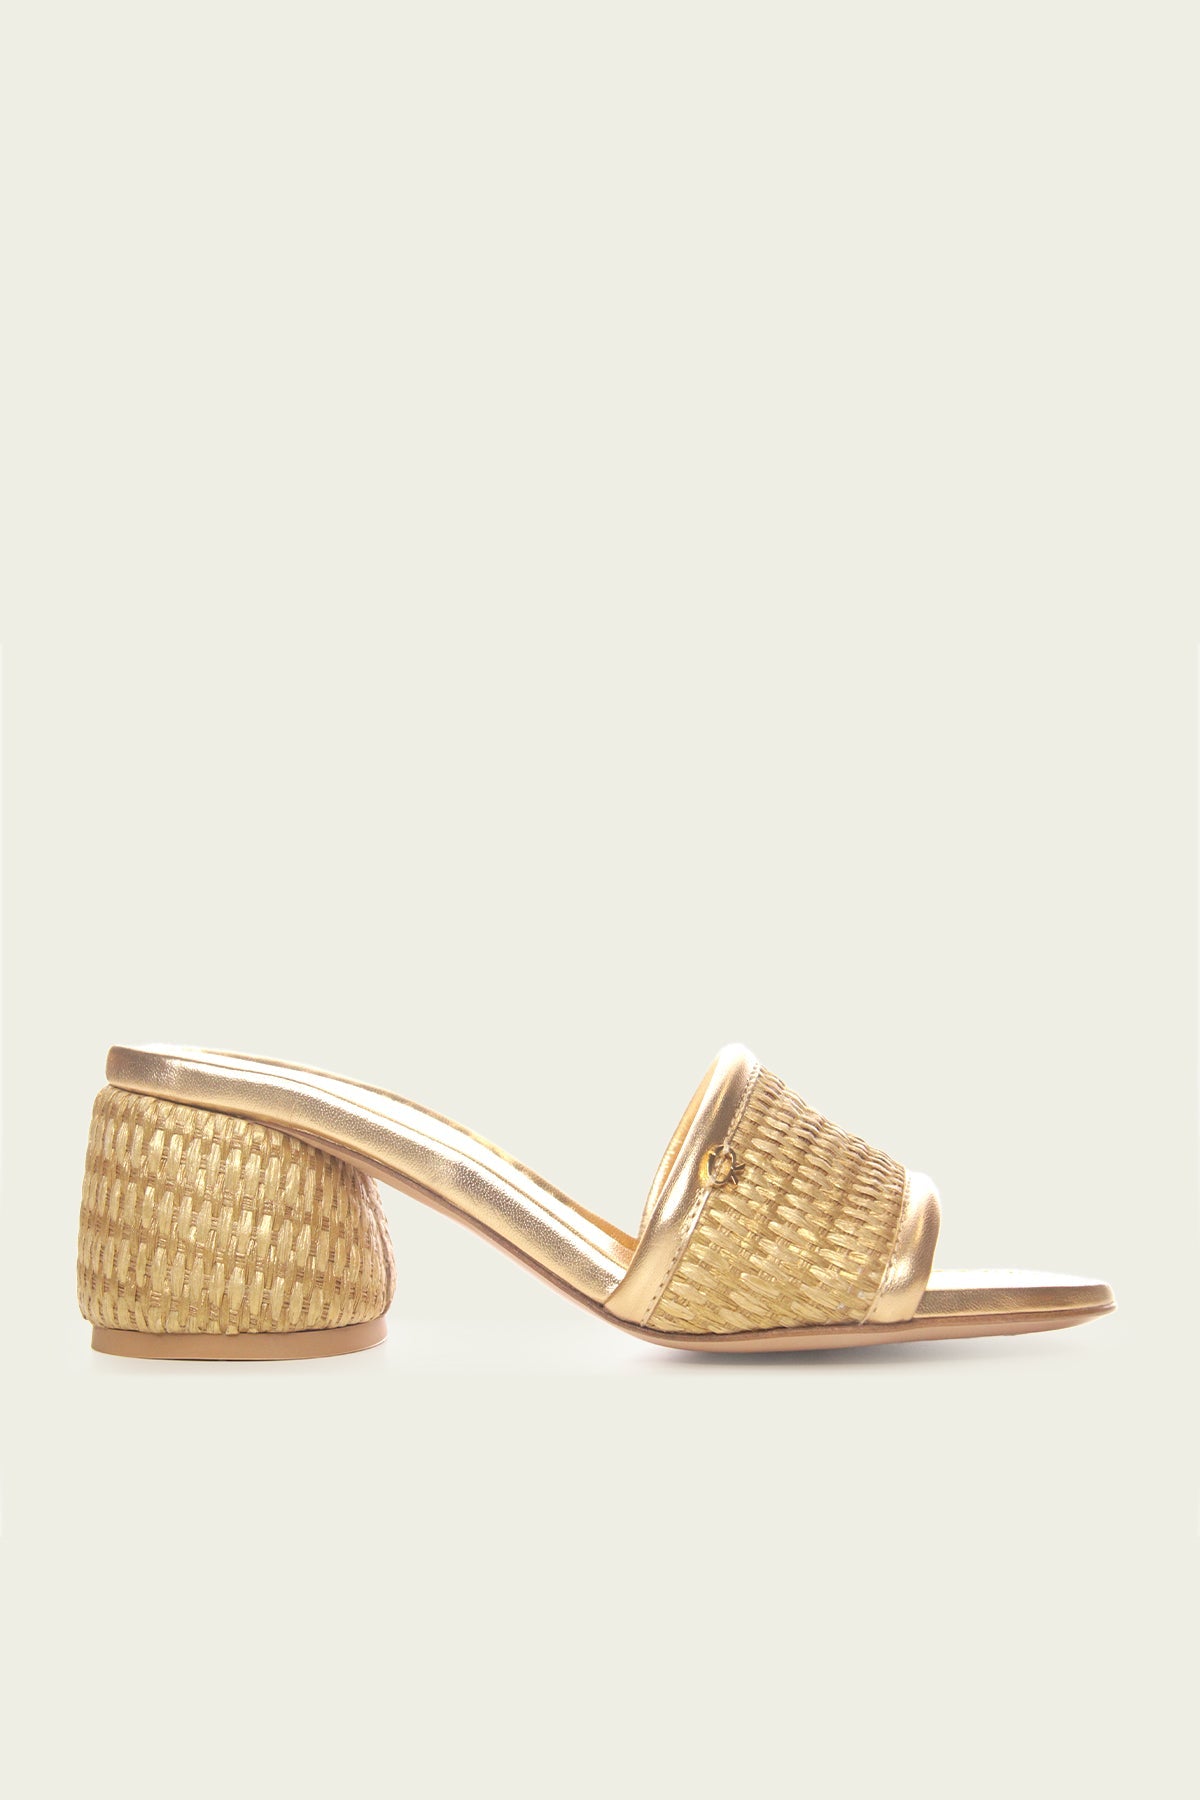 Marbella Metallic Raffia Block Slide Sandals in Gold - shop-olivia.com